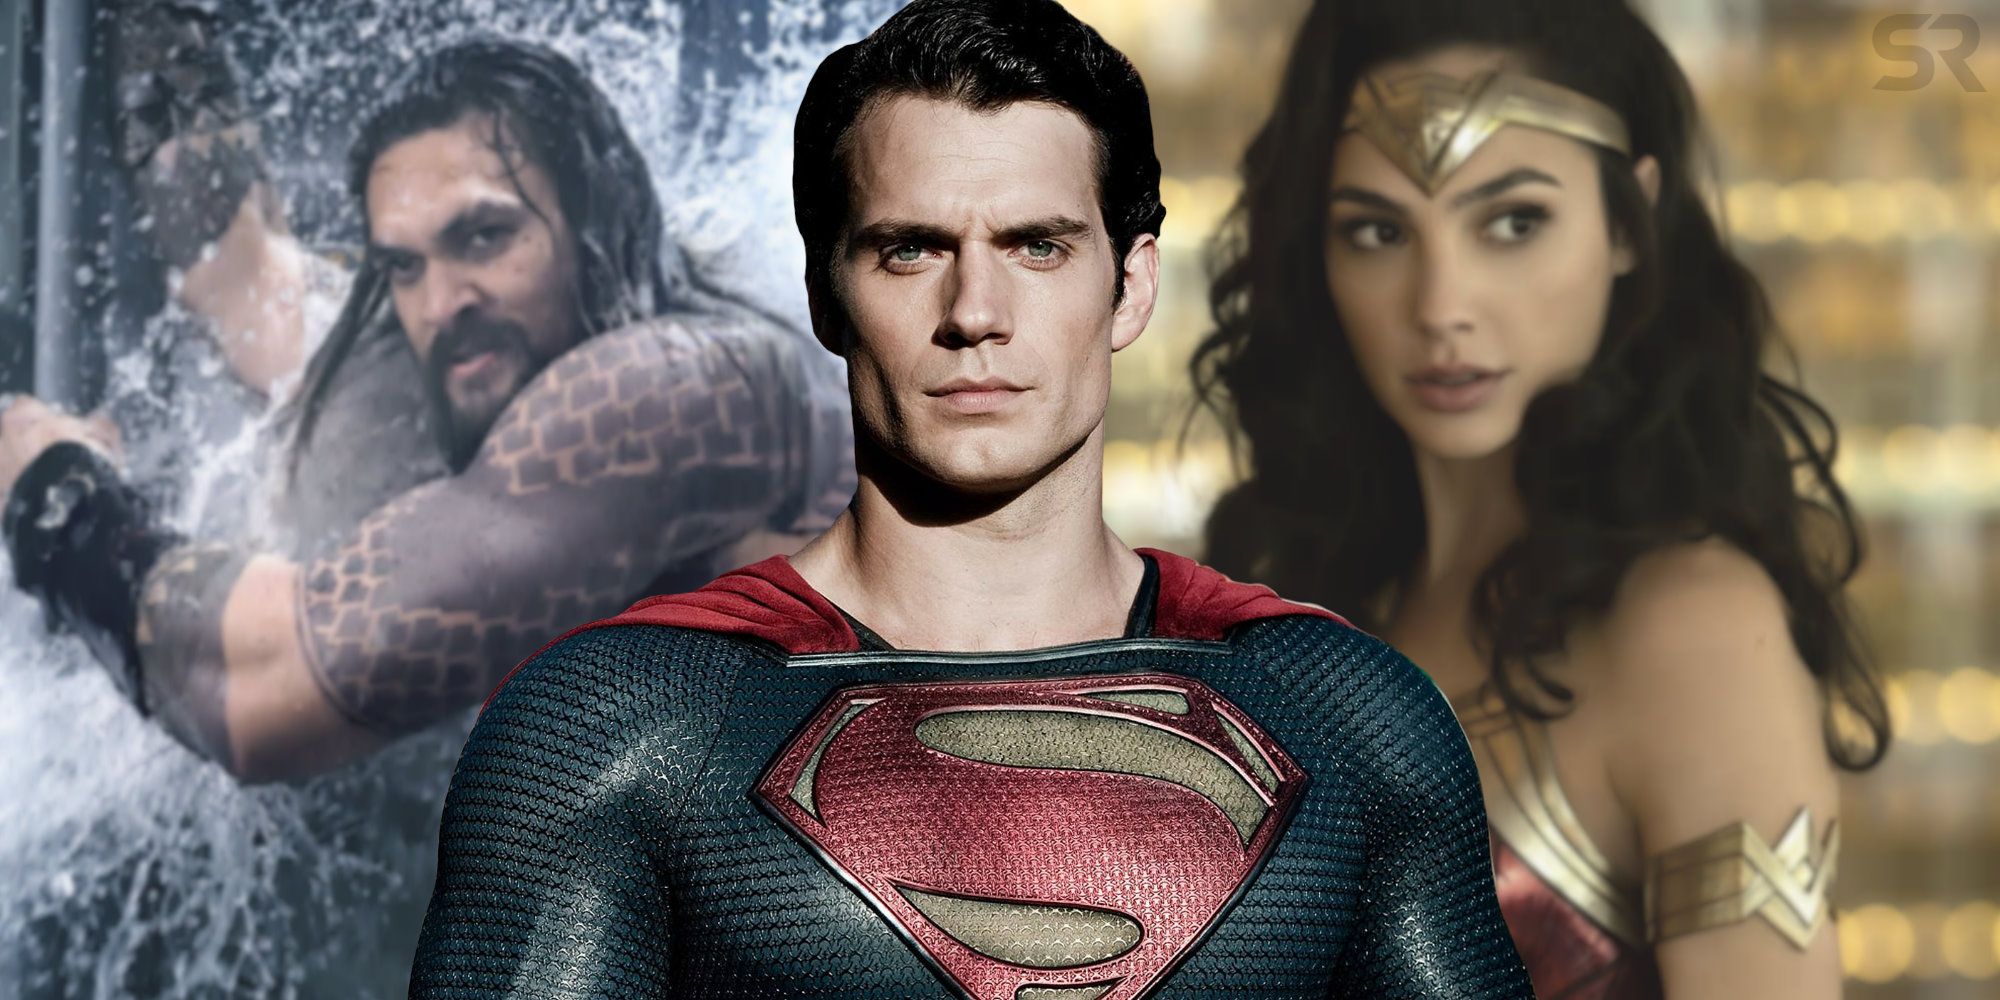 Jason Momoa as Aquaman, Henry Cavill as Superman, and Gal Gadot as Wonder Woman